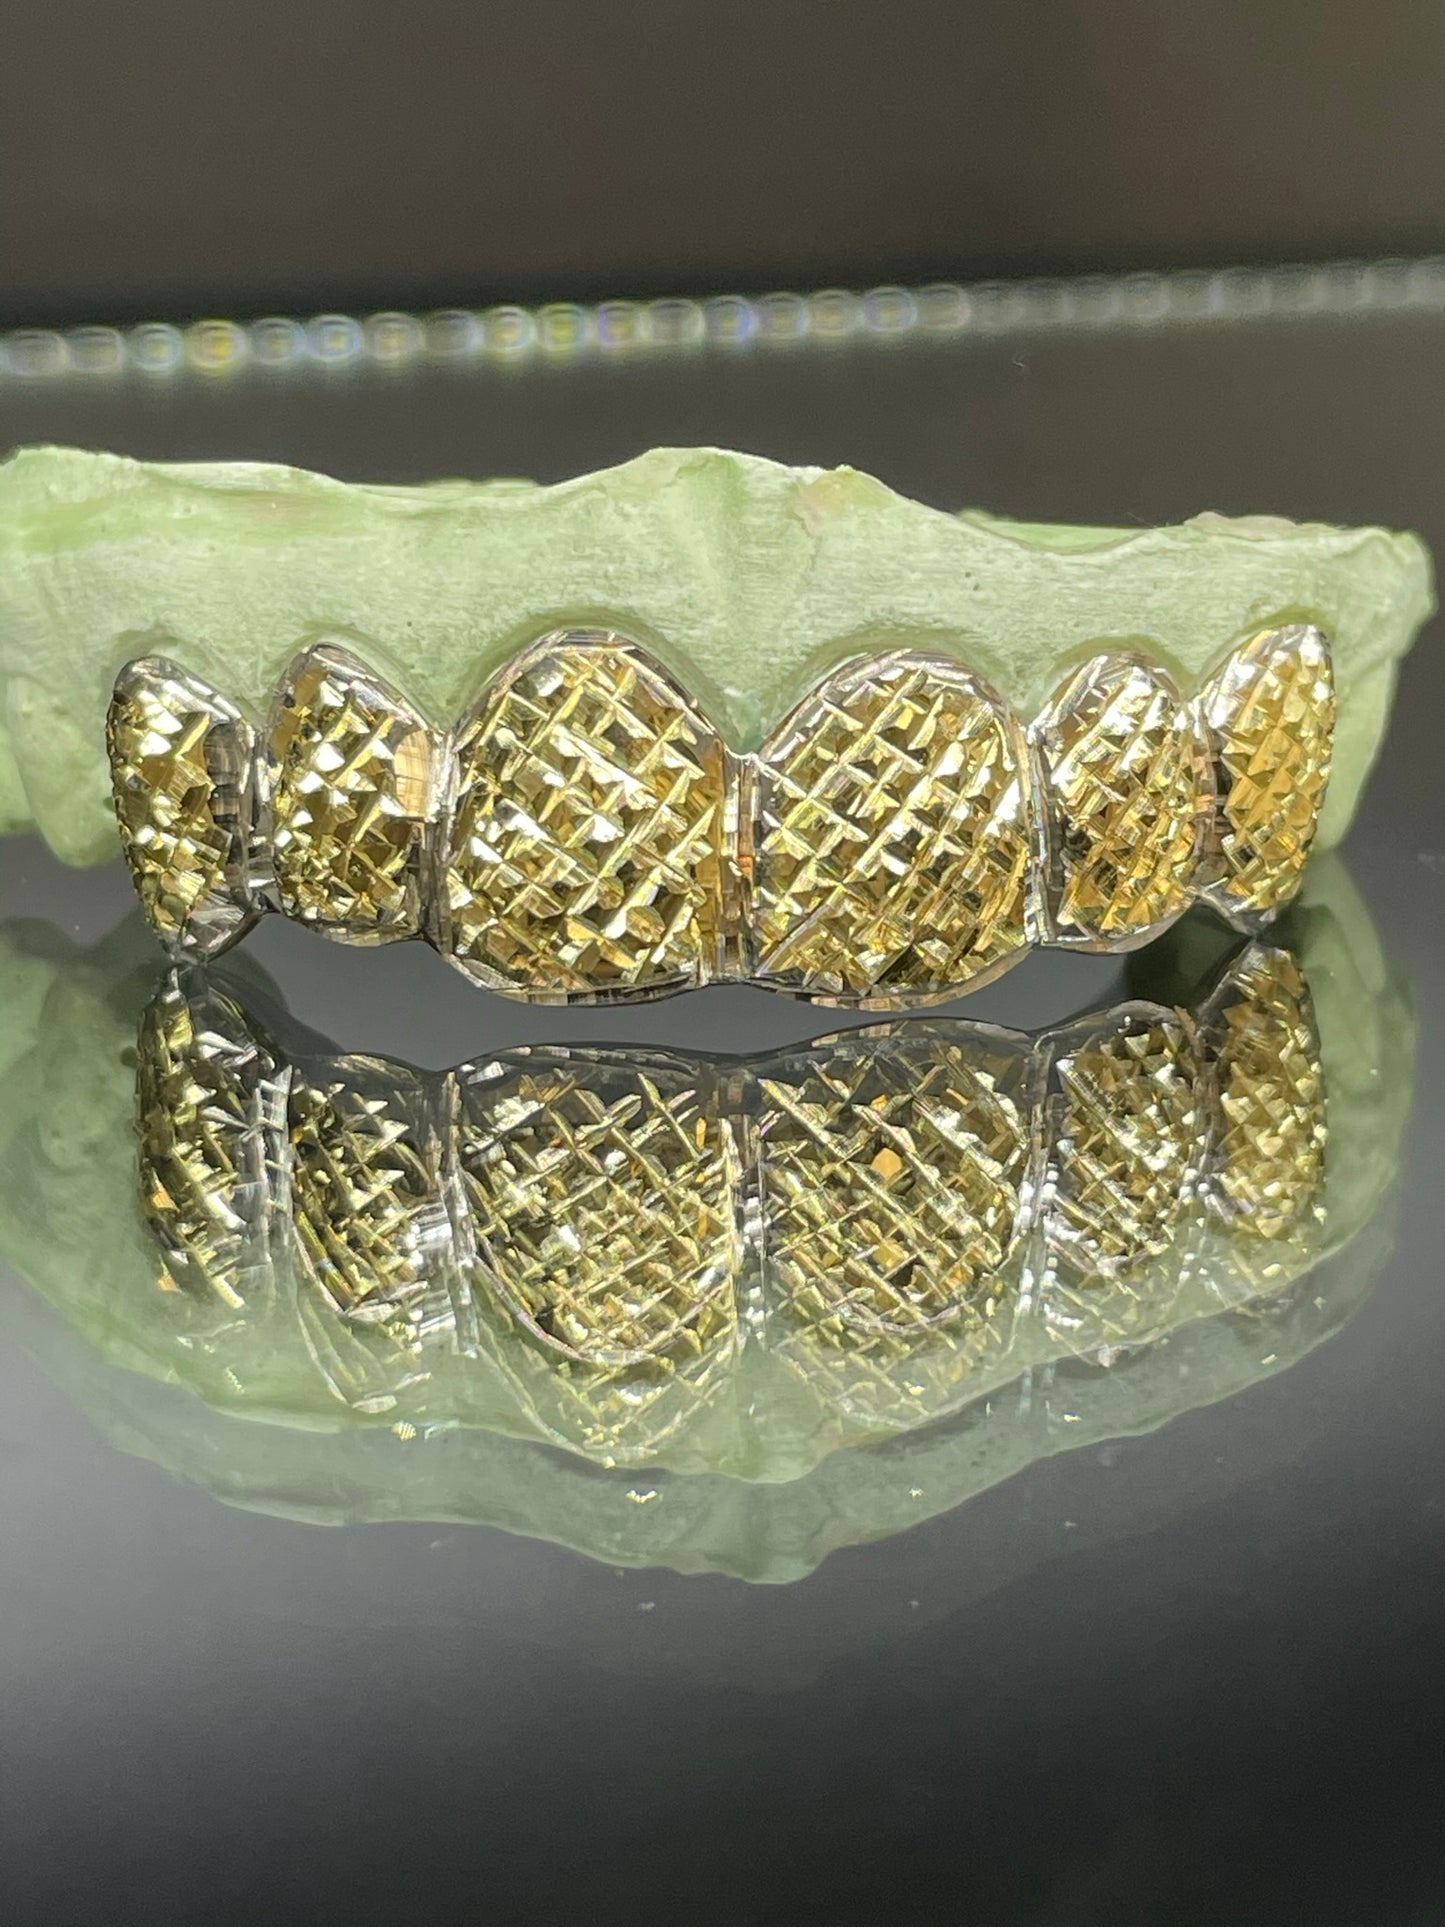 6 Teeth Gold Grillz - 6 Tops or Bottoms (Trillion Diamond Cuts)